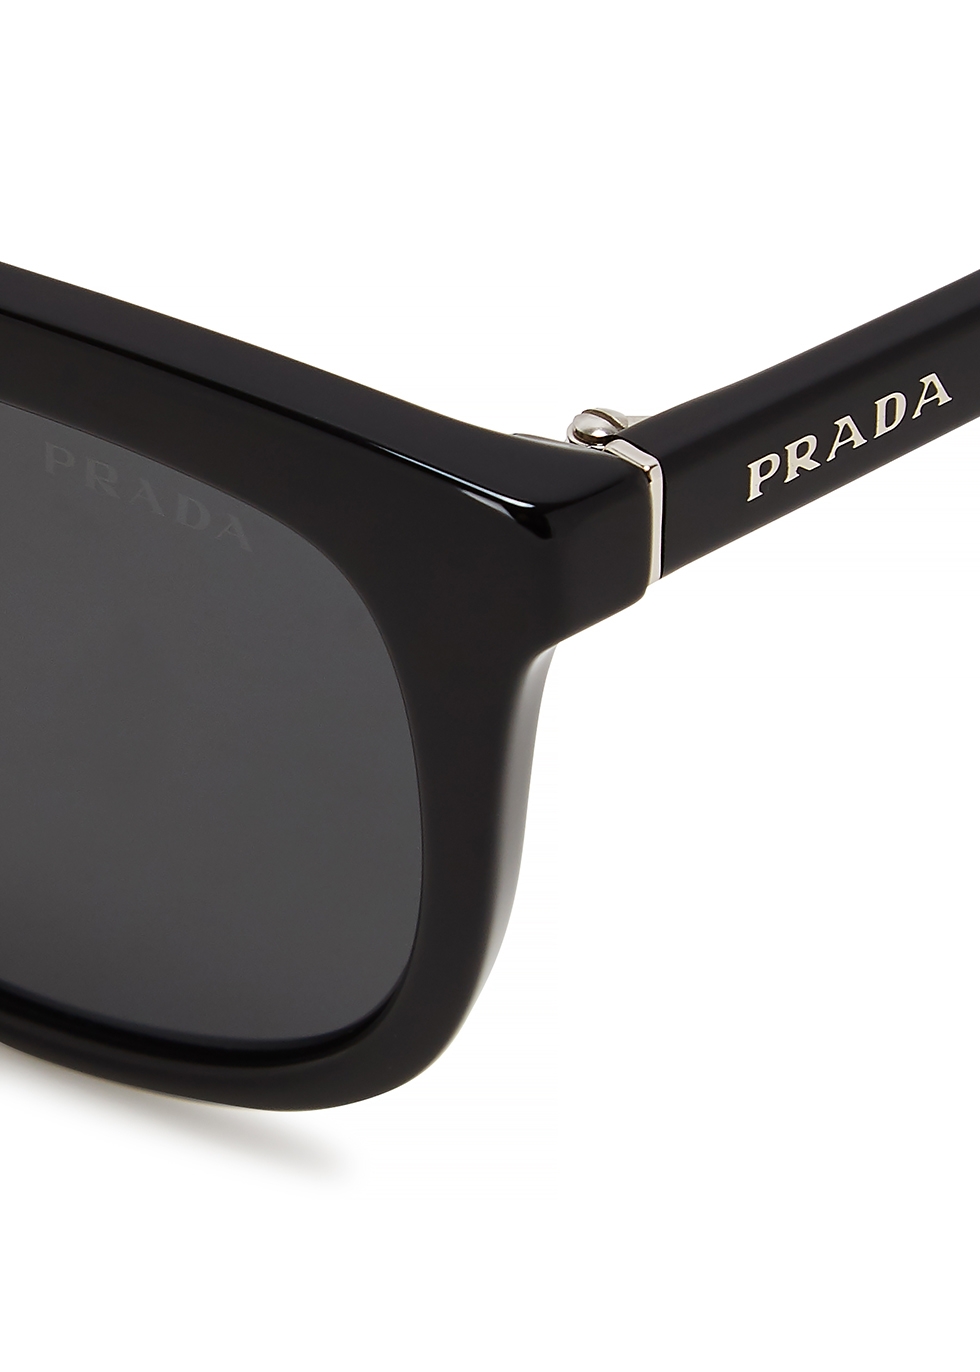 fashion black wayfarer sunglasses